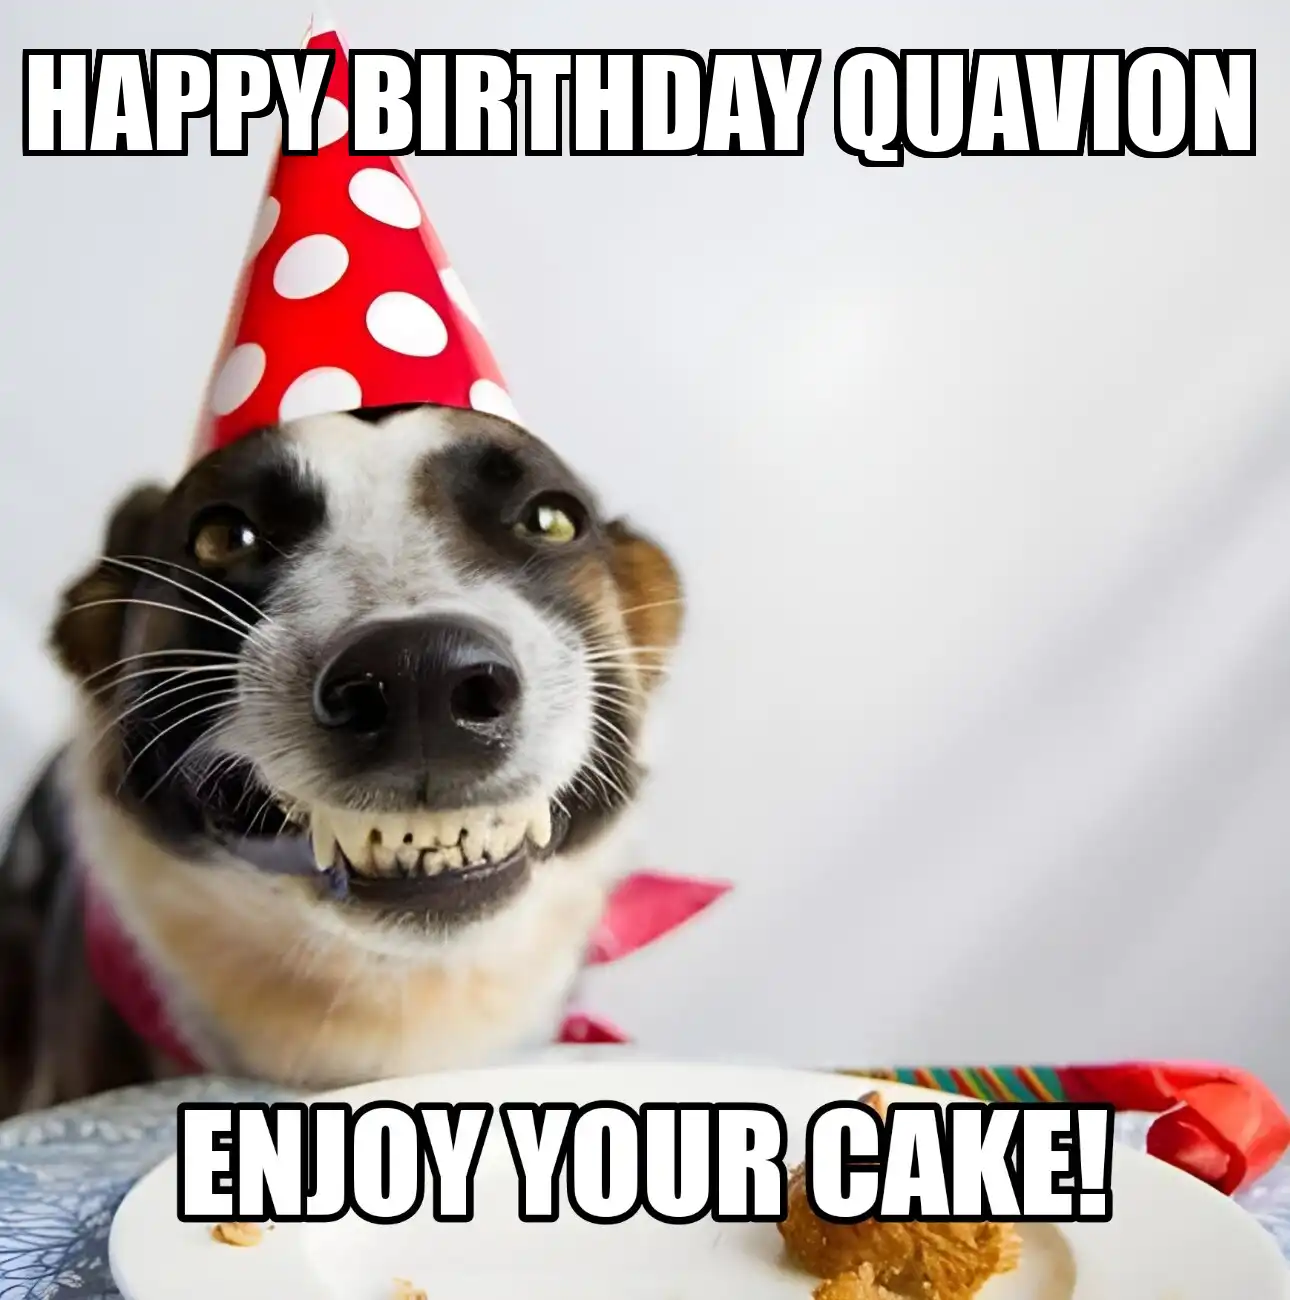 Happy Birthday Quavion Enjoy Your Cake Dog Meme